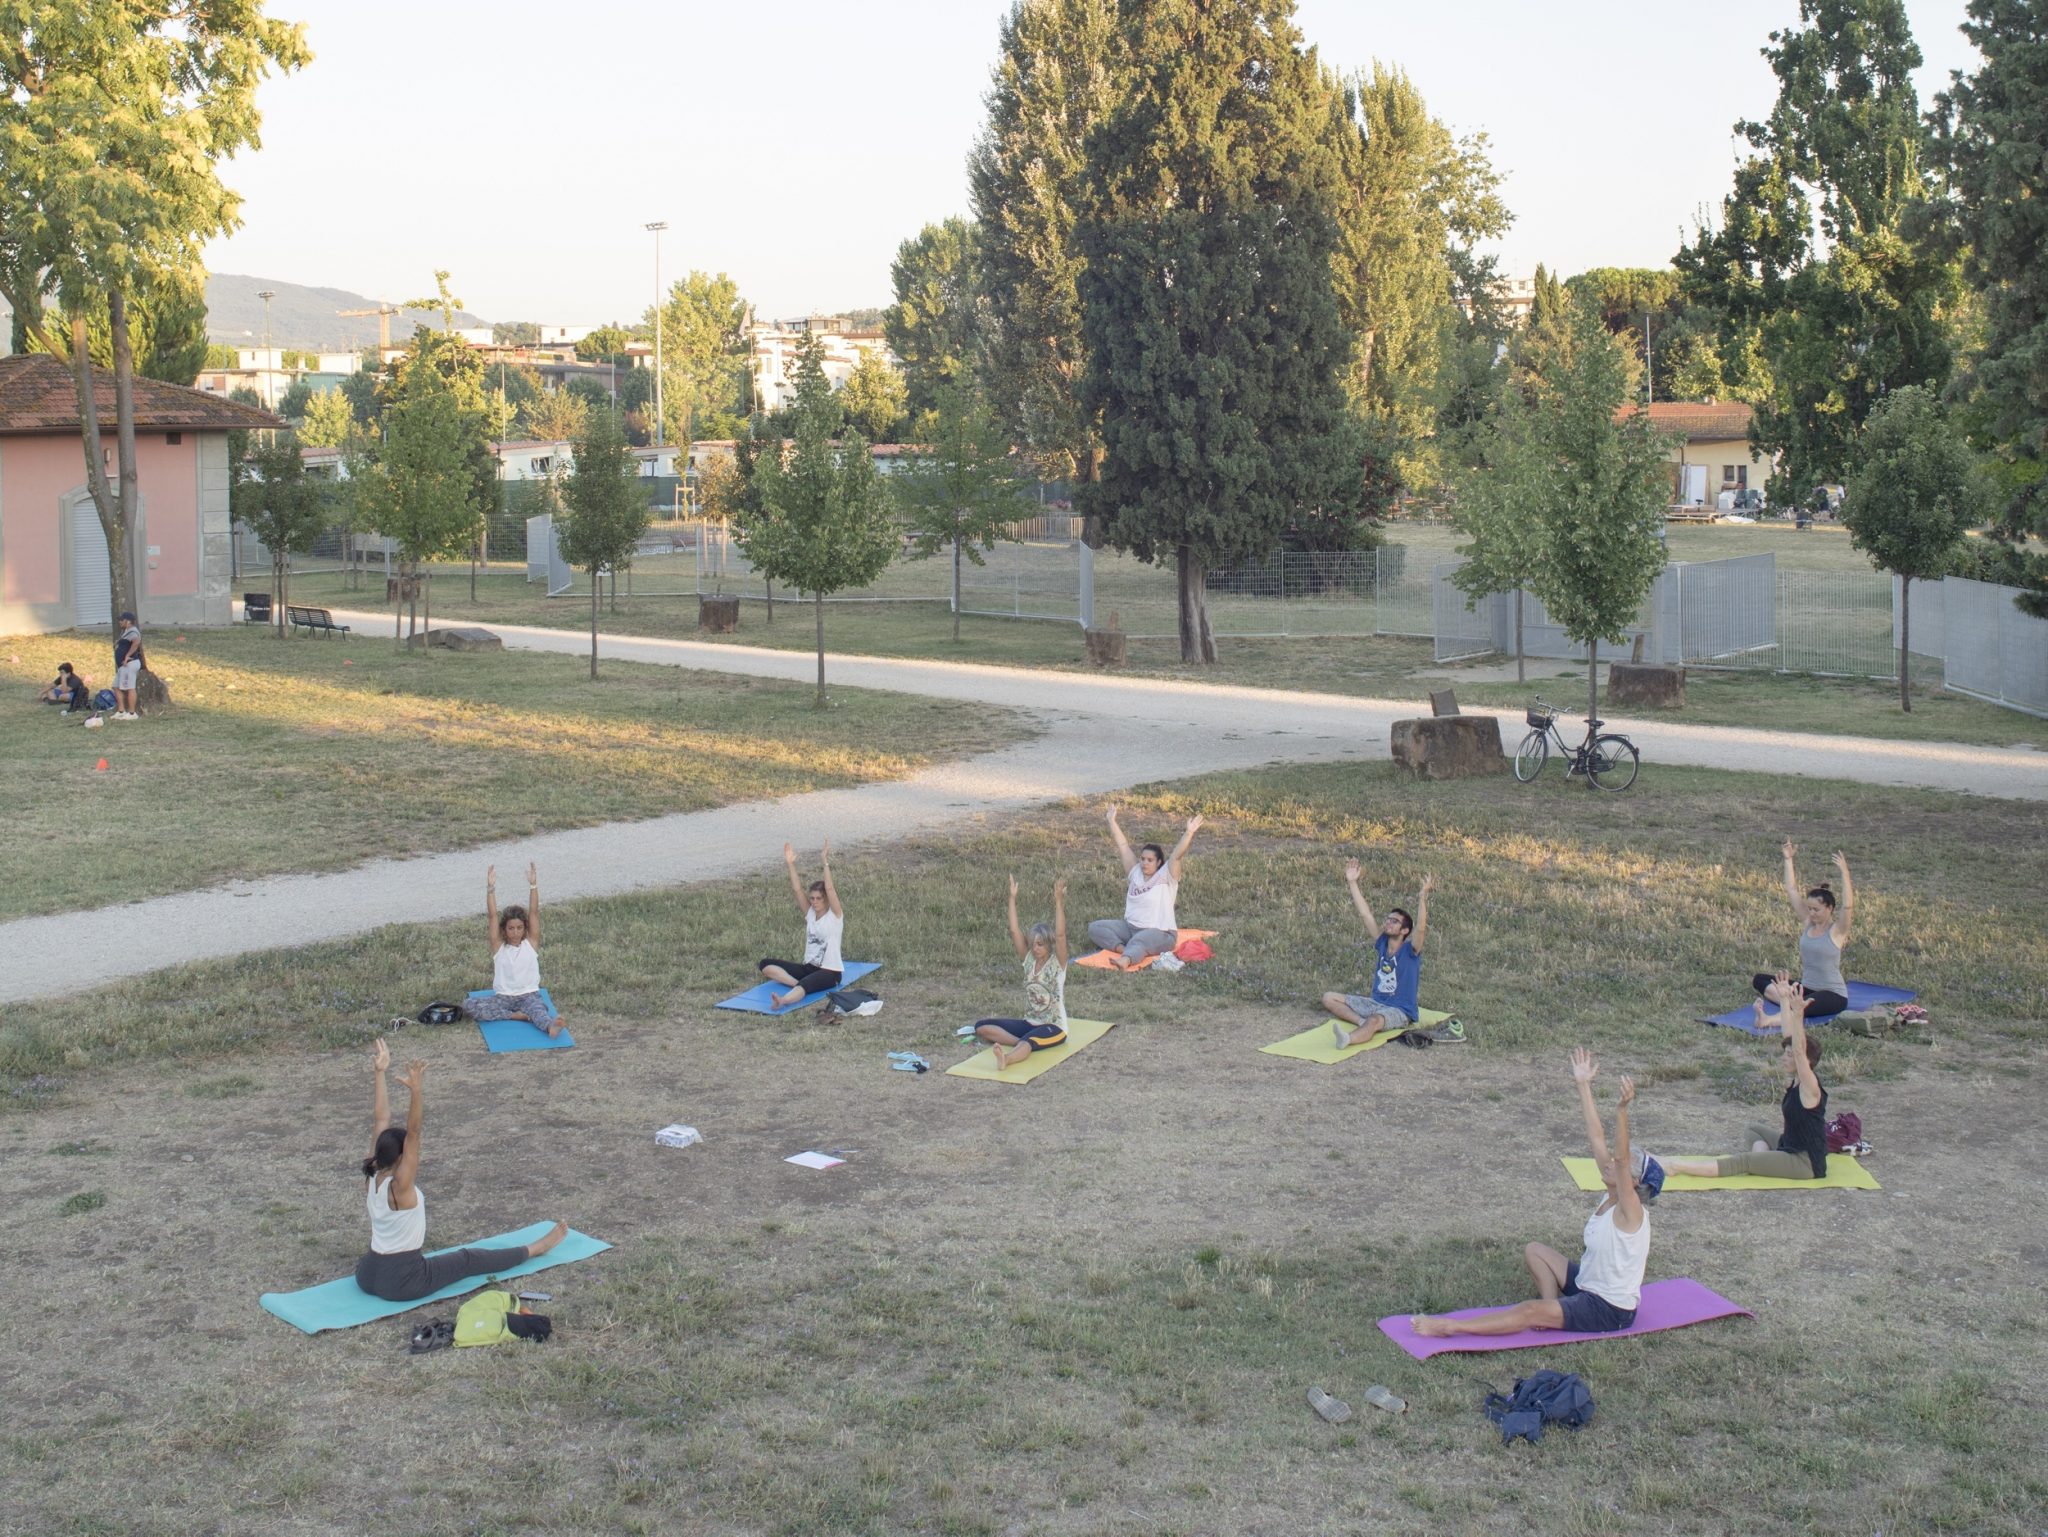 Yoga, Anconella Park, Florence, Italy, 2020